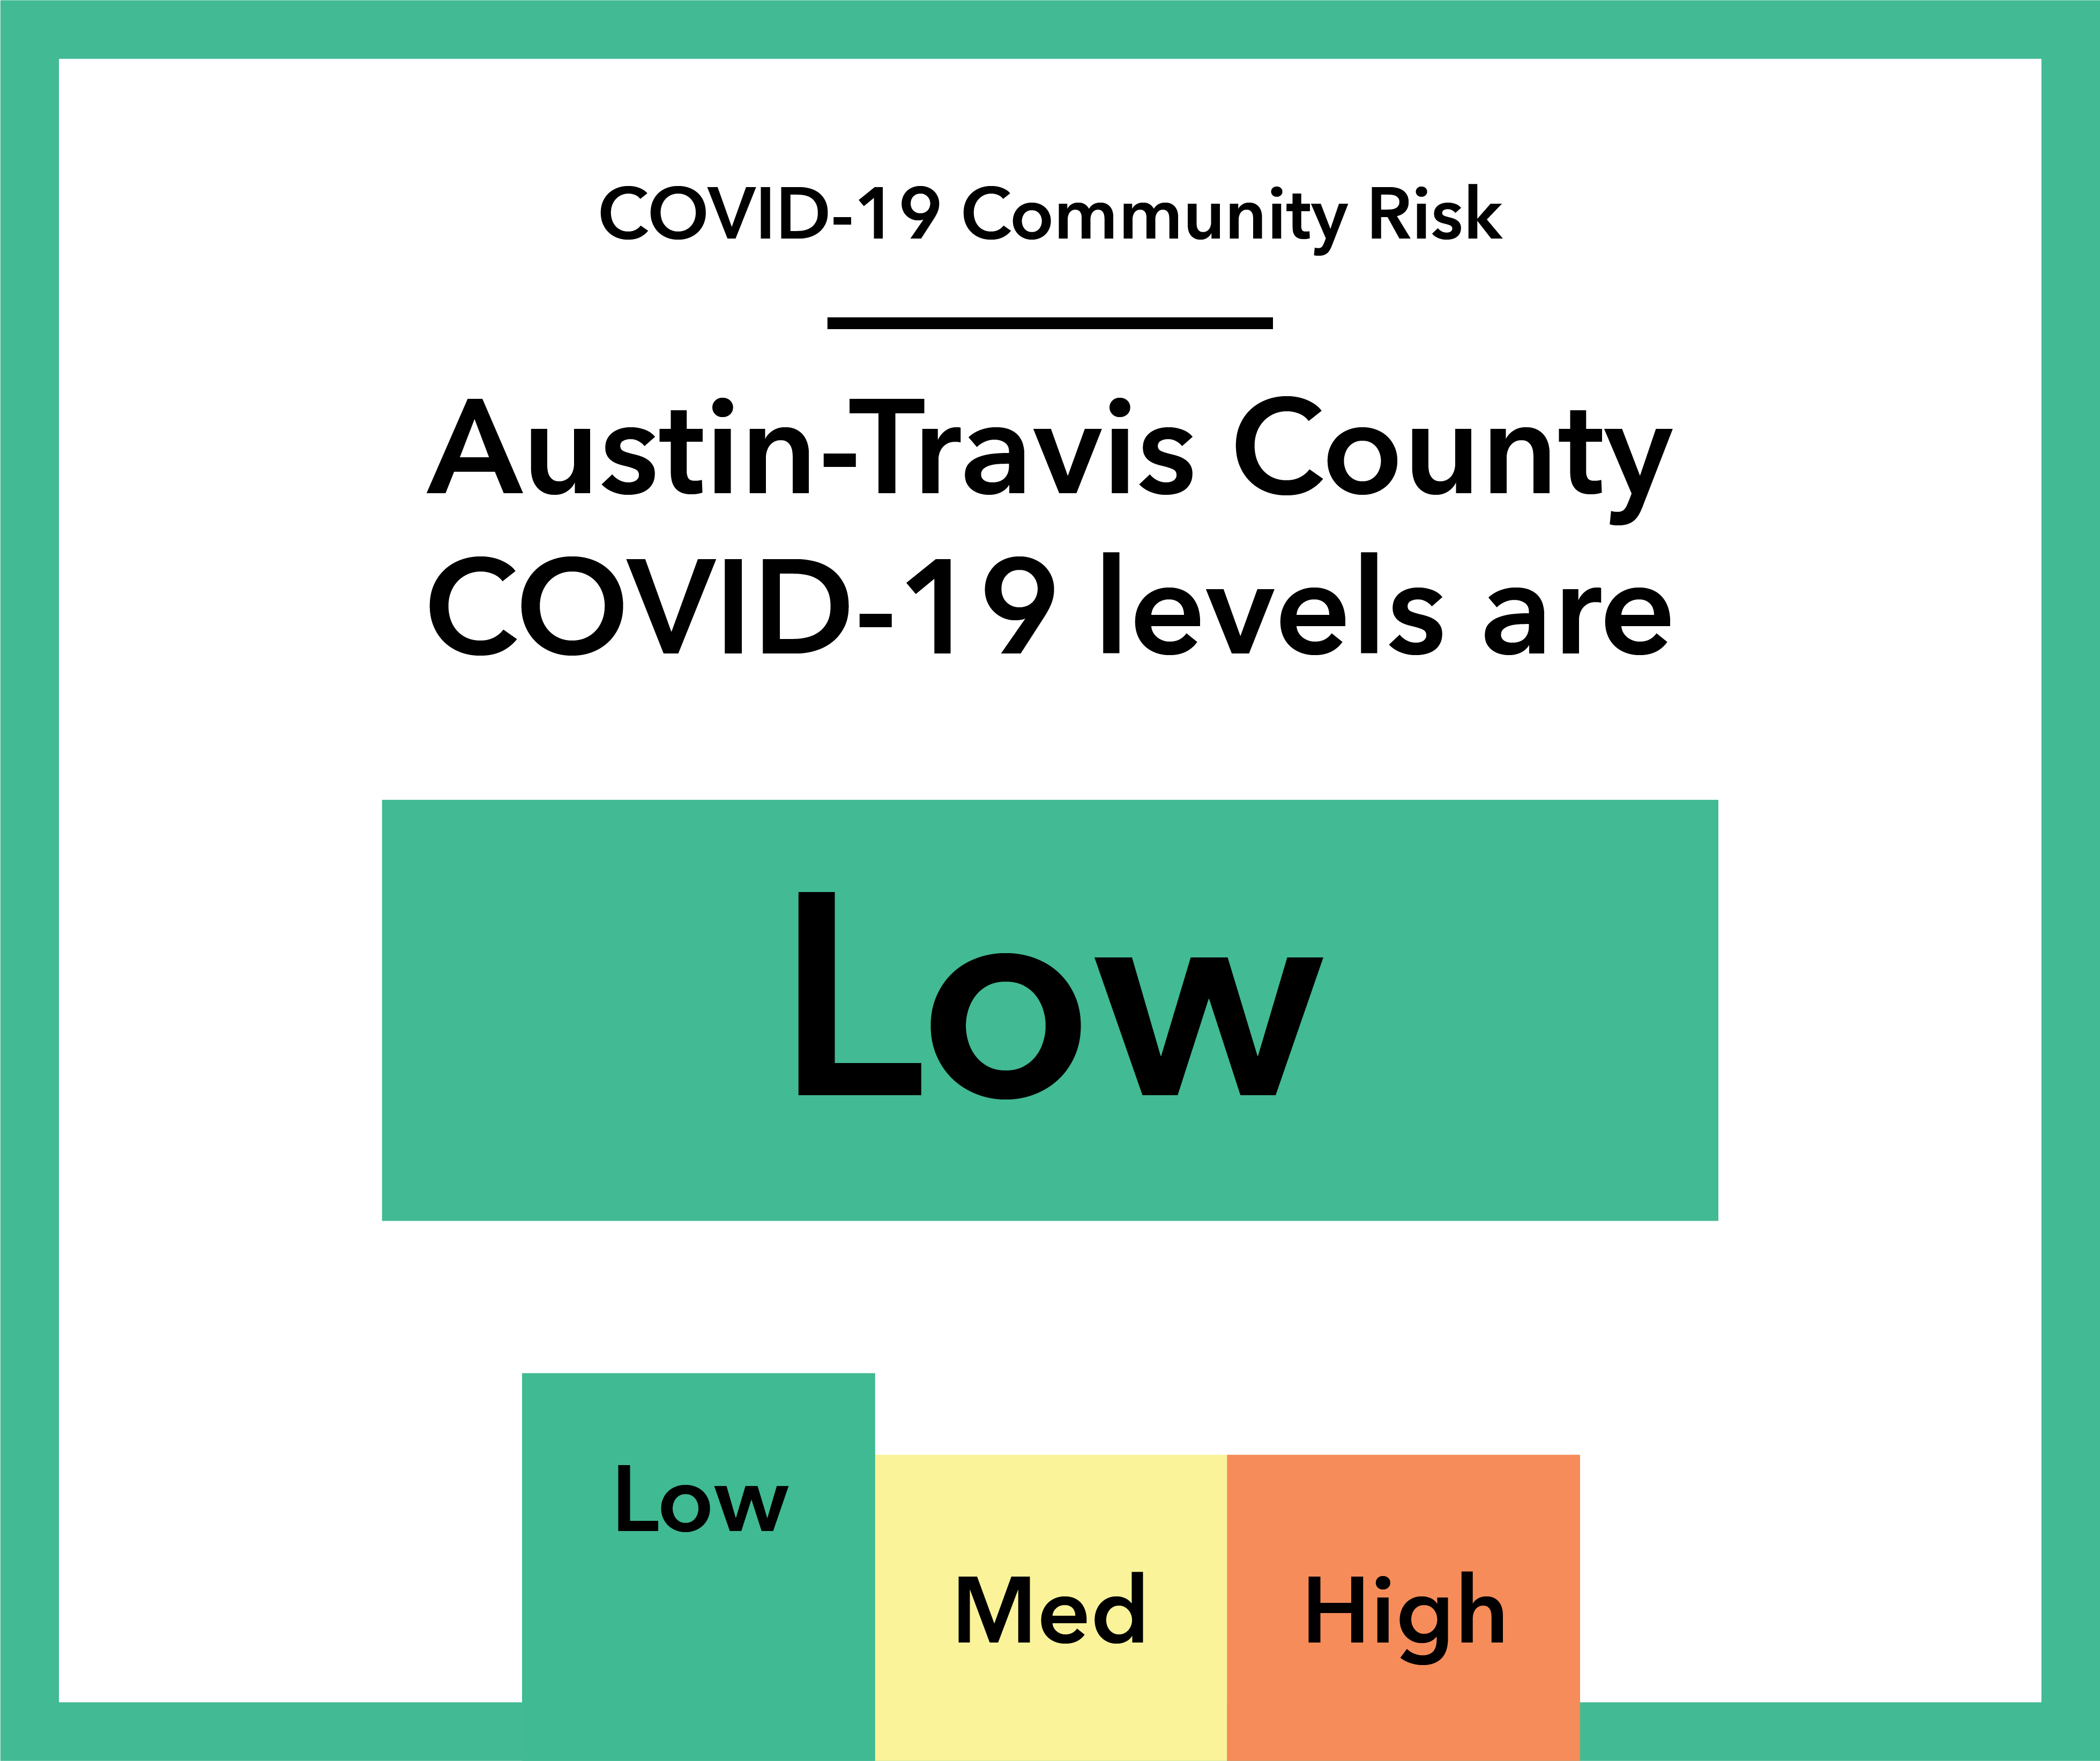 COVID-19 Community Level: Low